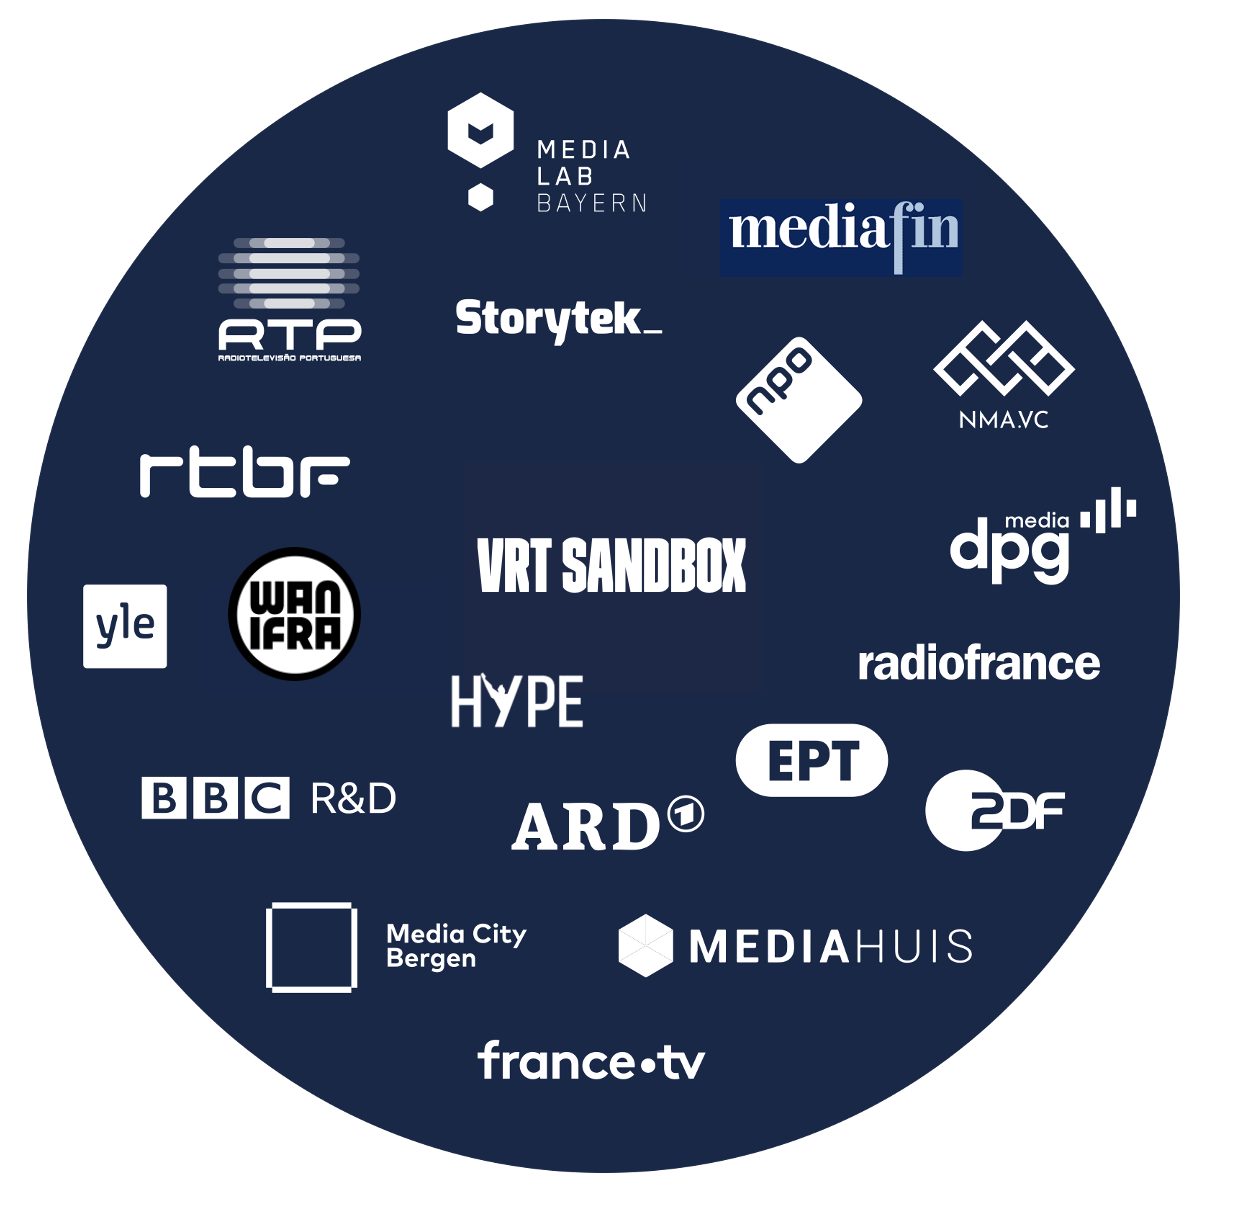 A graphic of media startup incubators that have followed VRT Sandbox's model